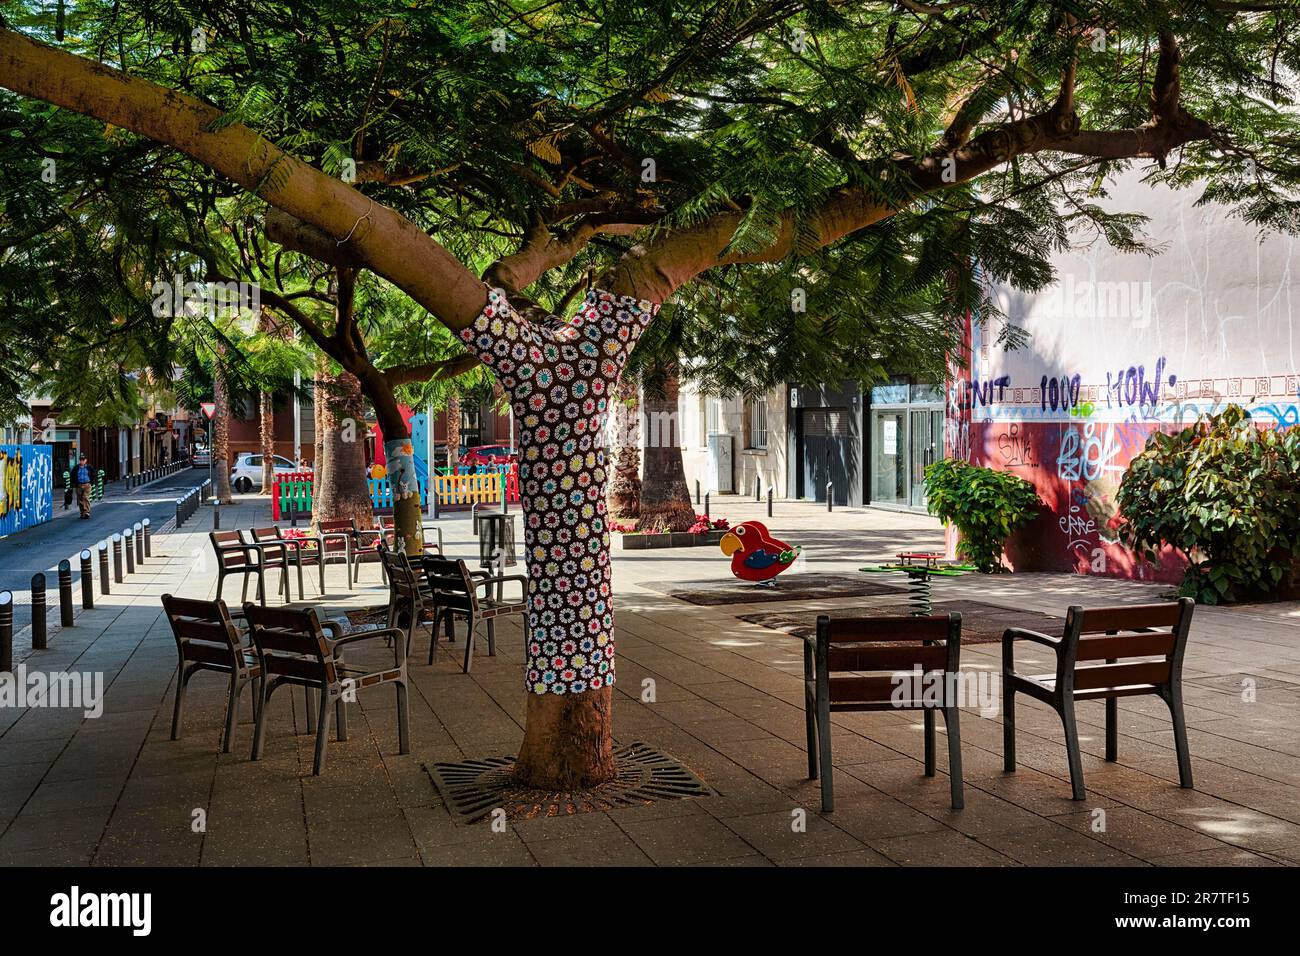 Sedie sotto l'albero nella zona pedonale, arte della maglieria, maglieria urbana, maglieria guerilla, Calle Viera y Clavijo, Santa Cruz de Tenerife, Tenerife, Spagna Foto Stock